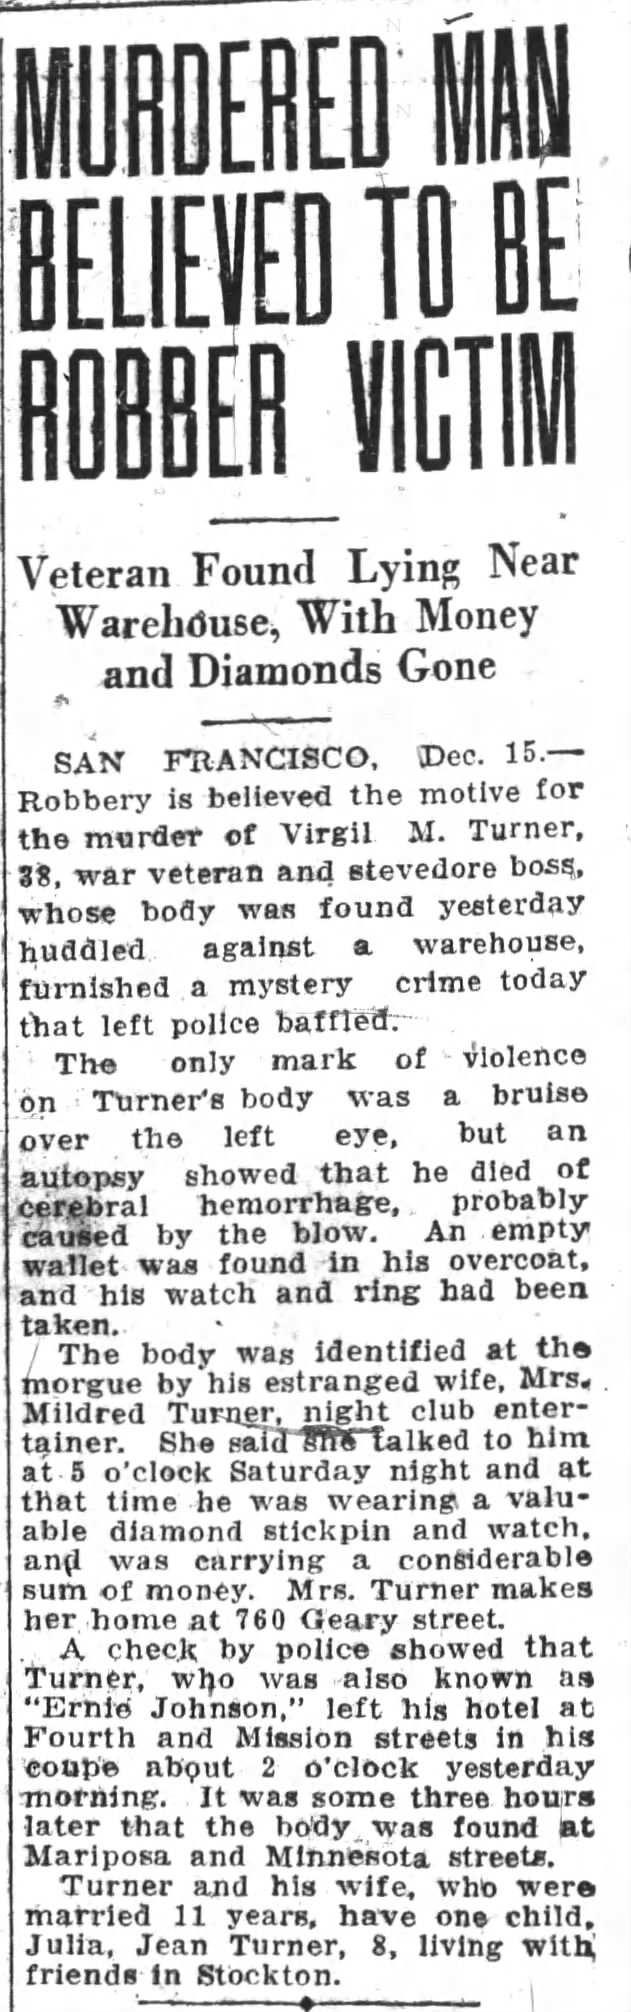 Death of Virgil Turner